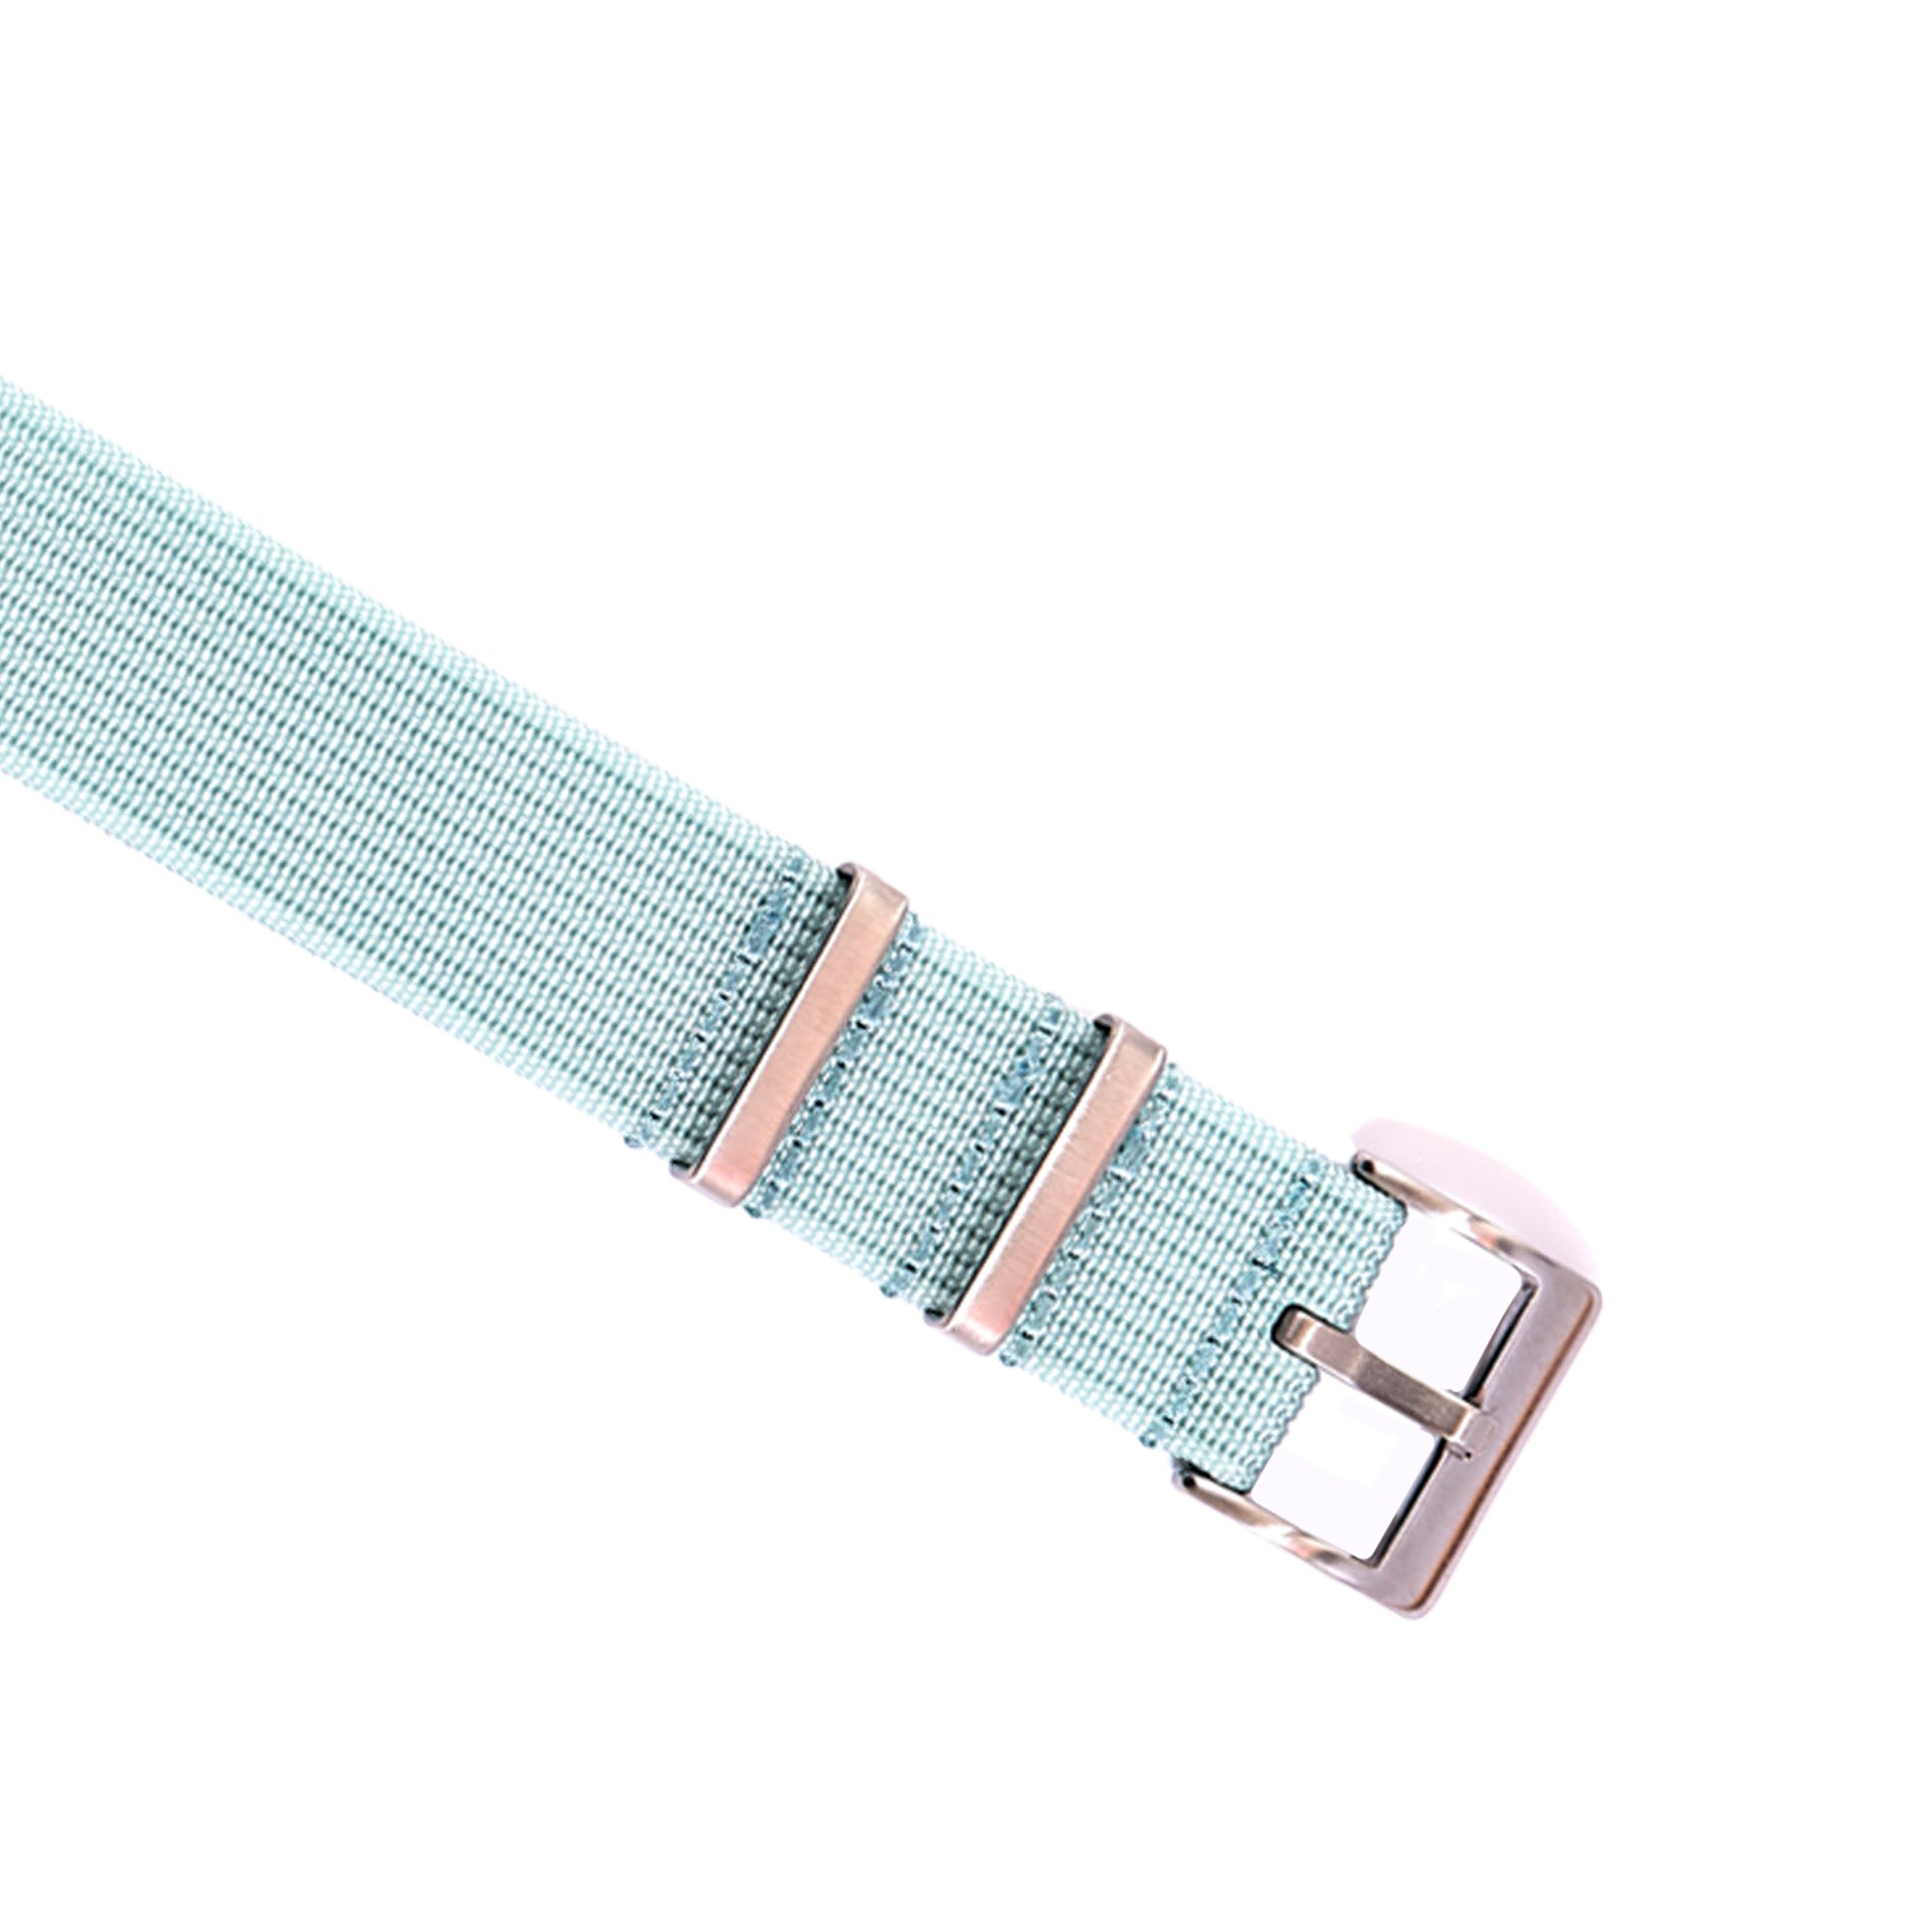 Ribbed Ballistic Nylon Strap - Light Blue